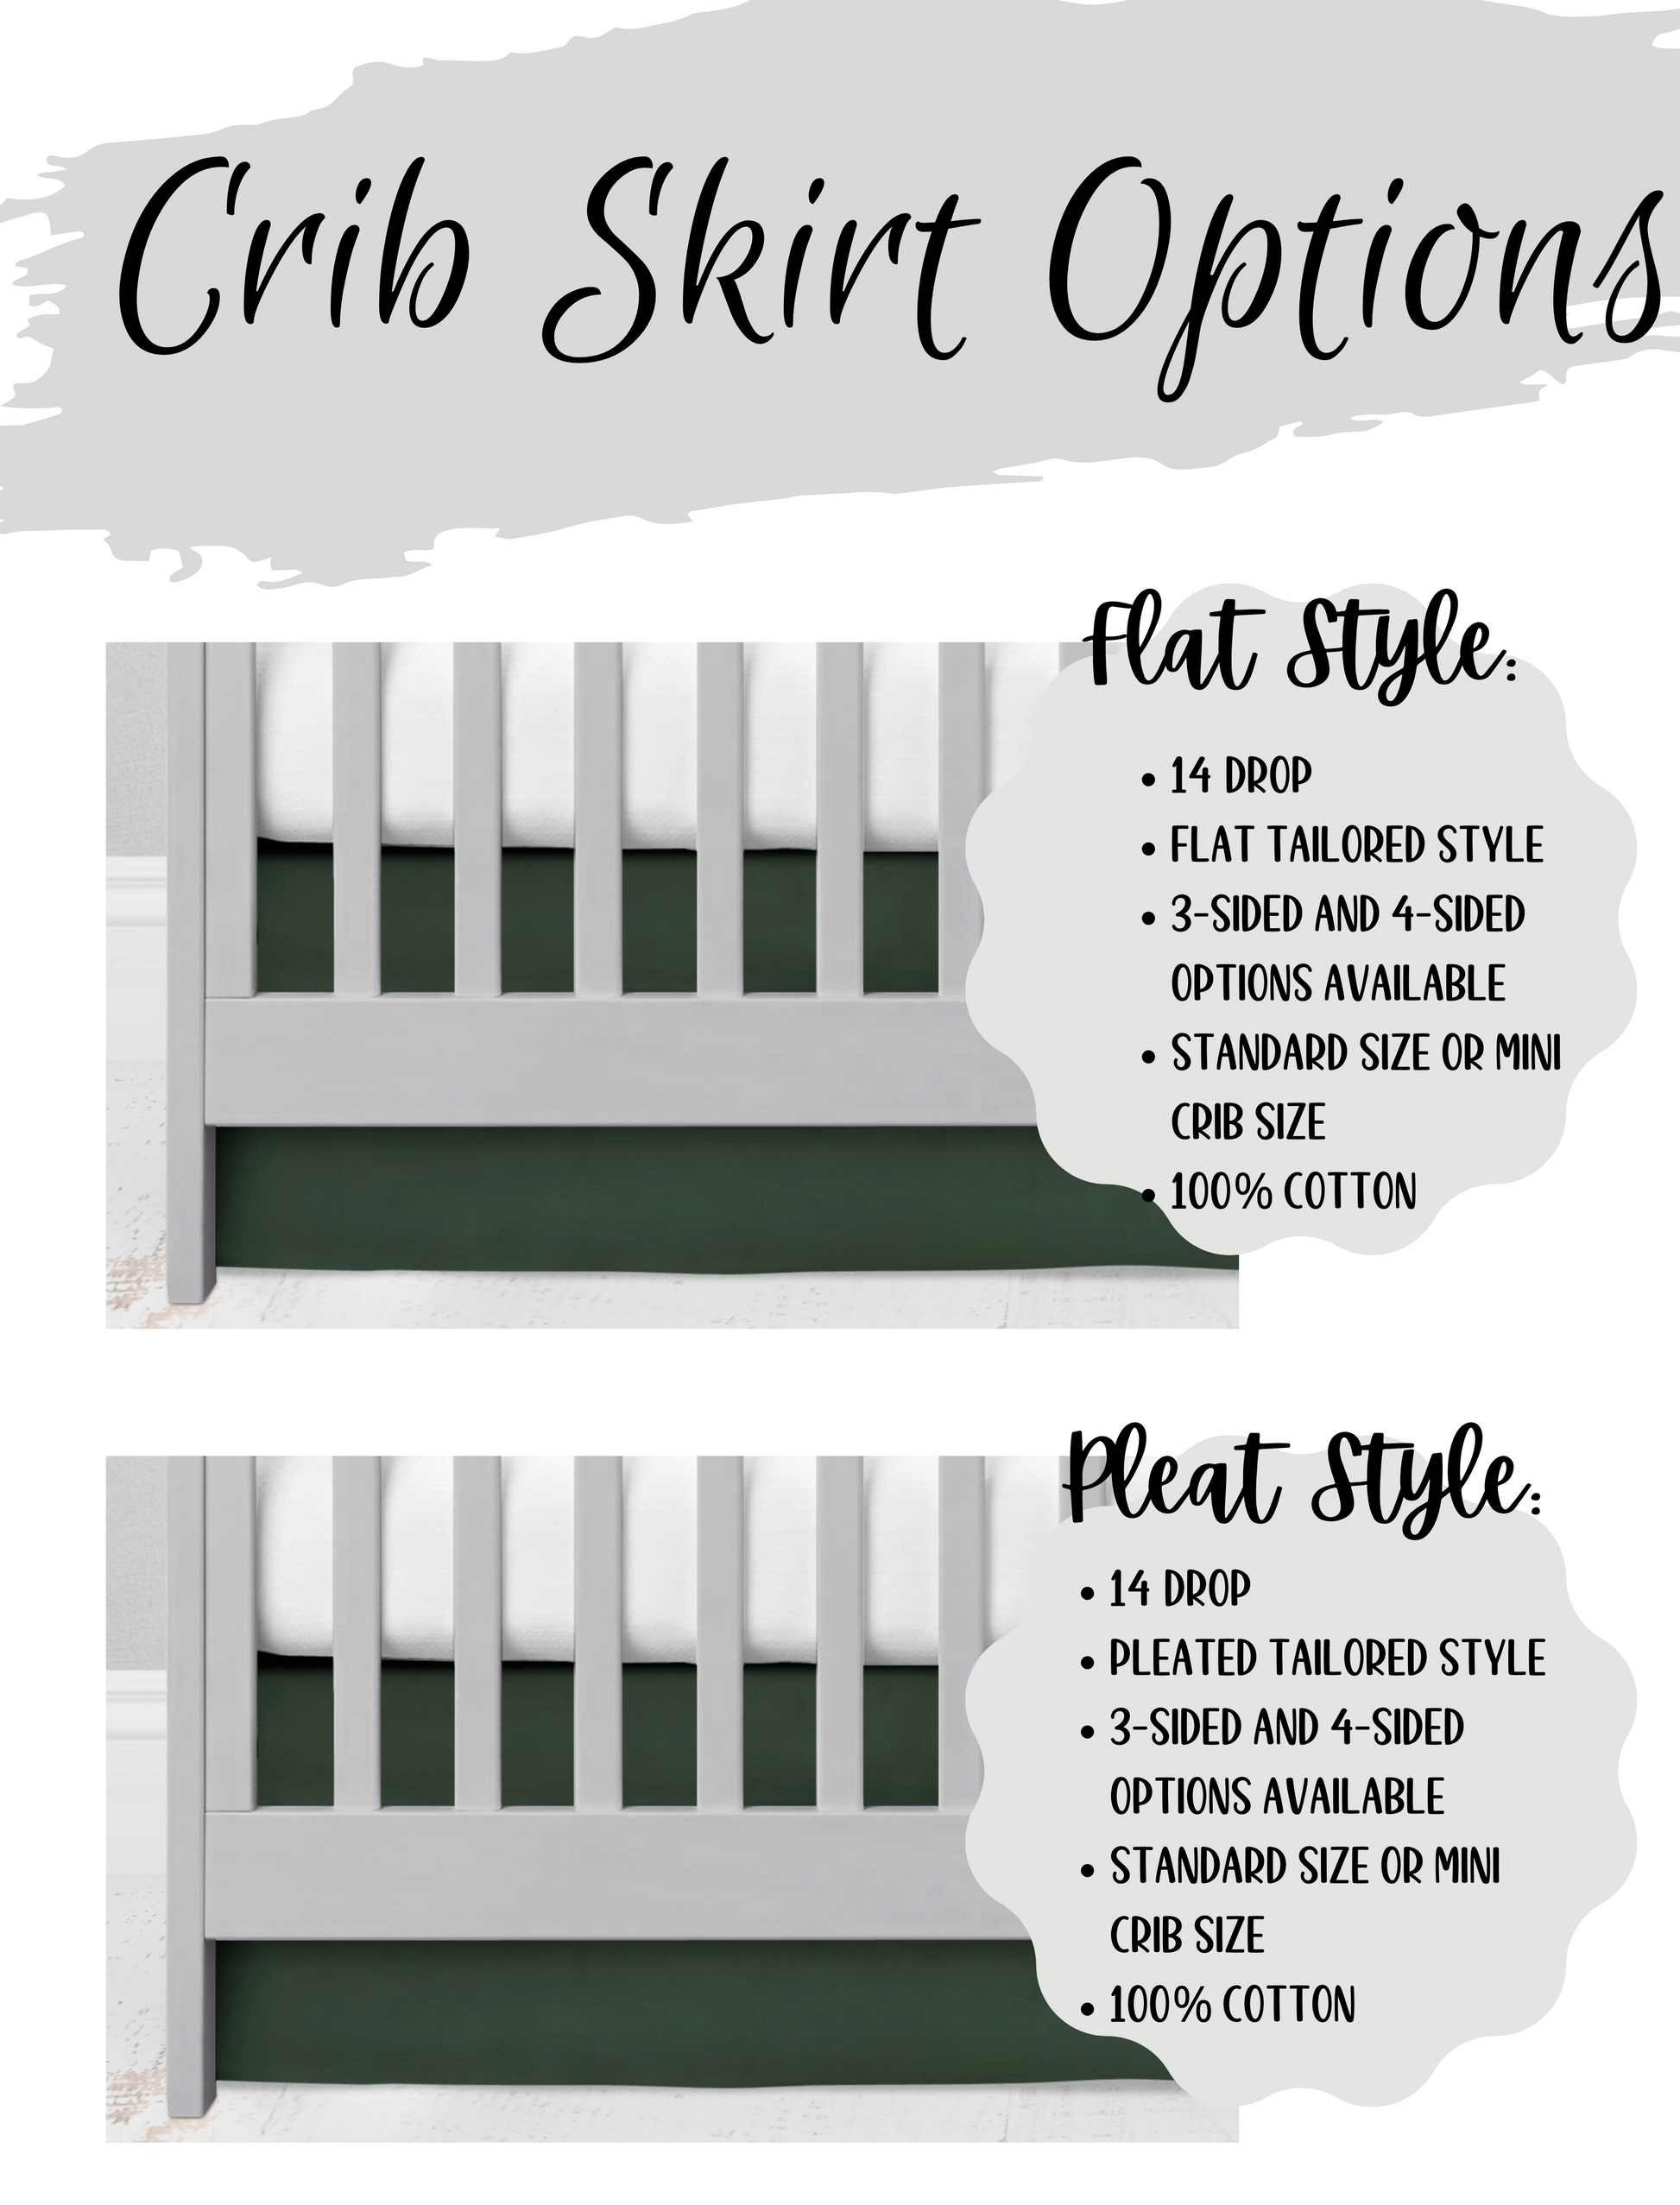 crib skirt options - flat and pleat